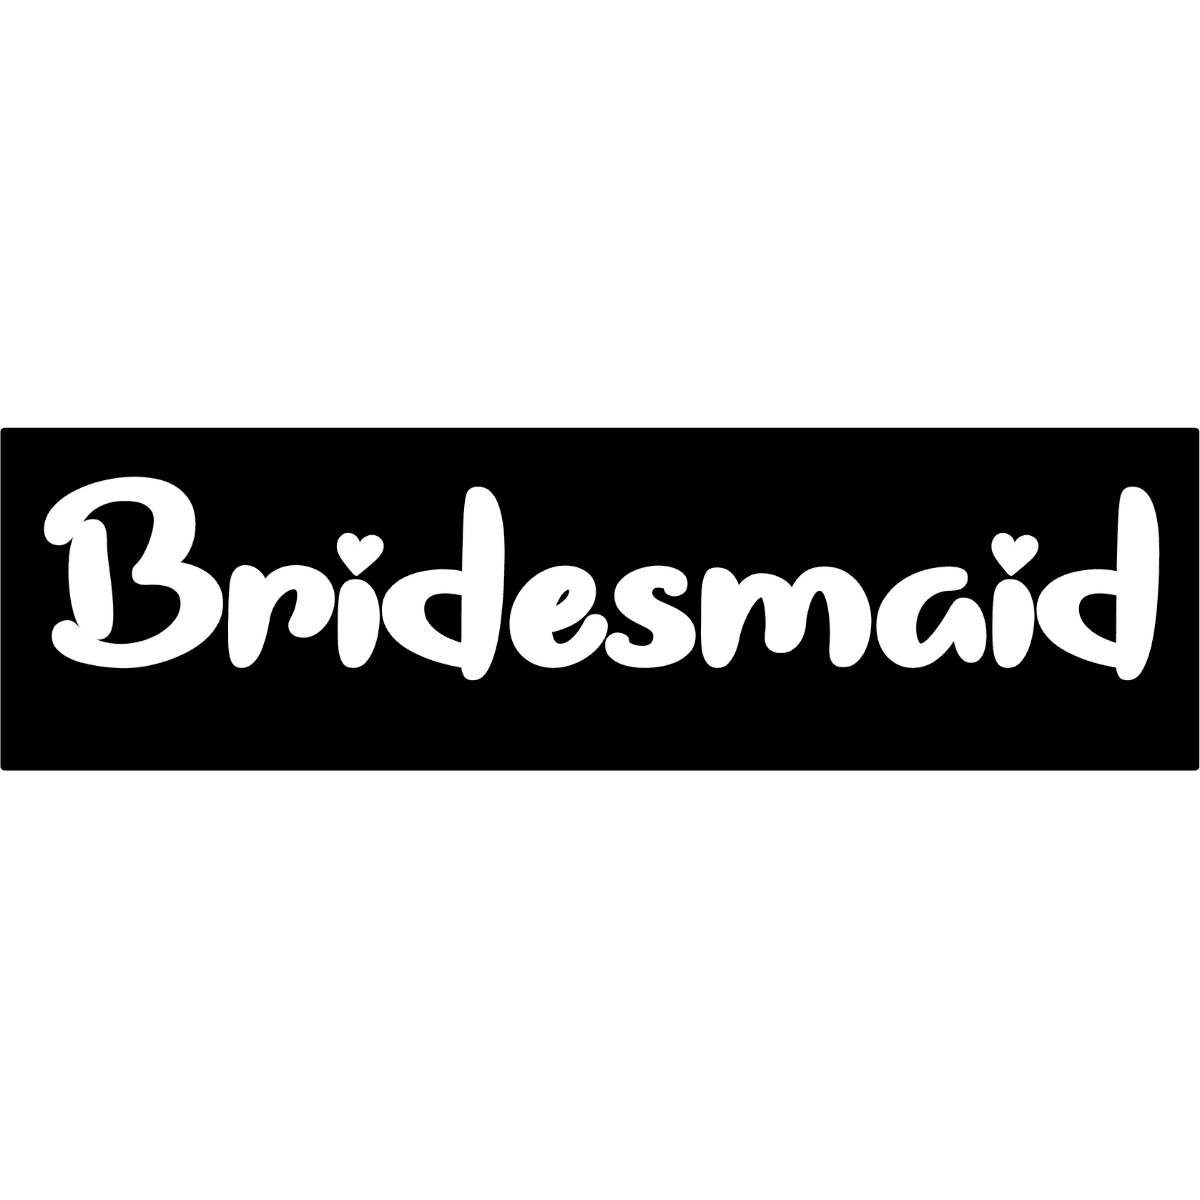 Bridesmaid-1